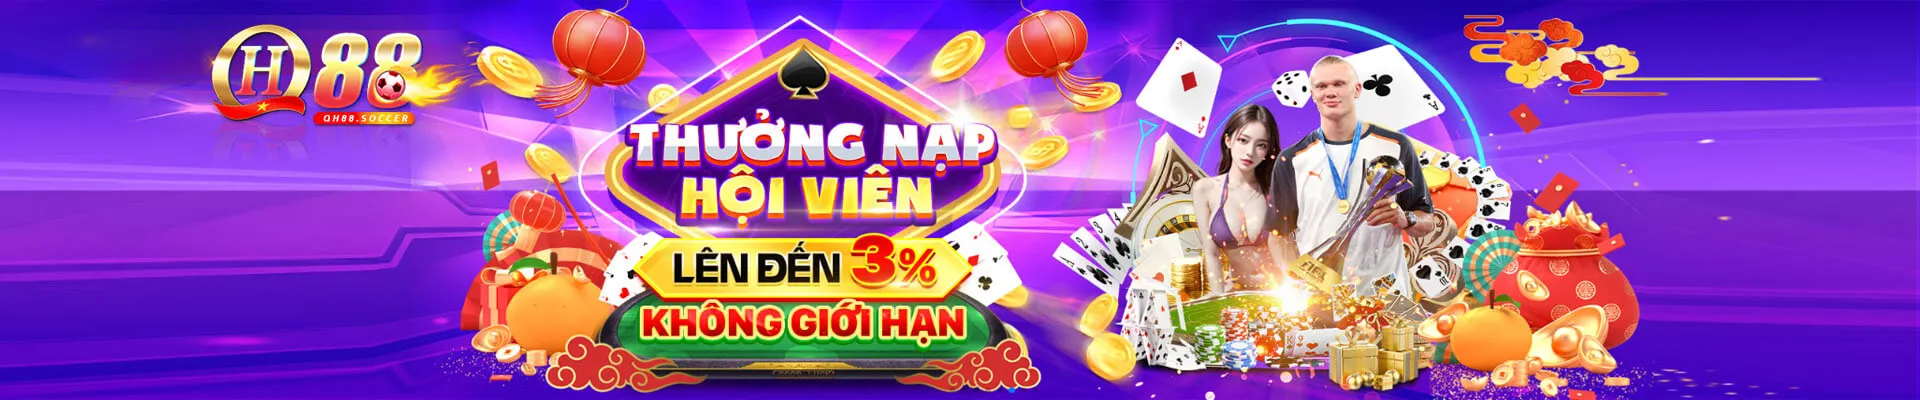 banner-thuong-nap-hoi-vien-qh88